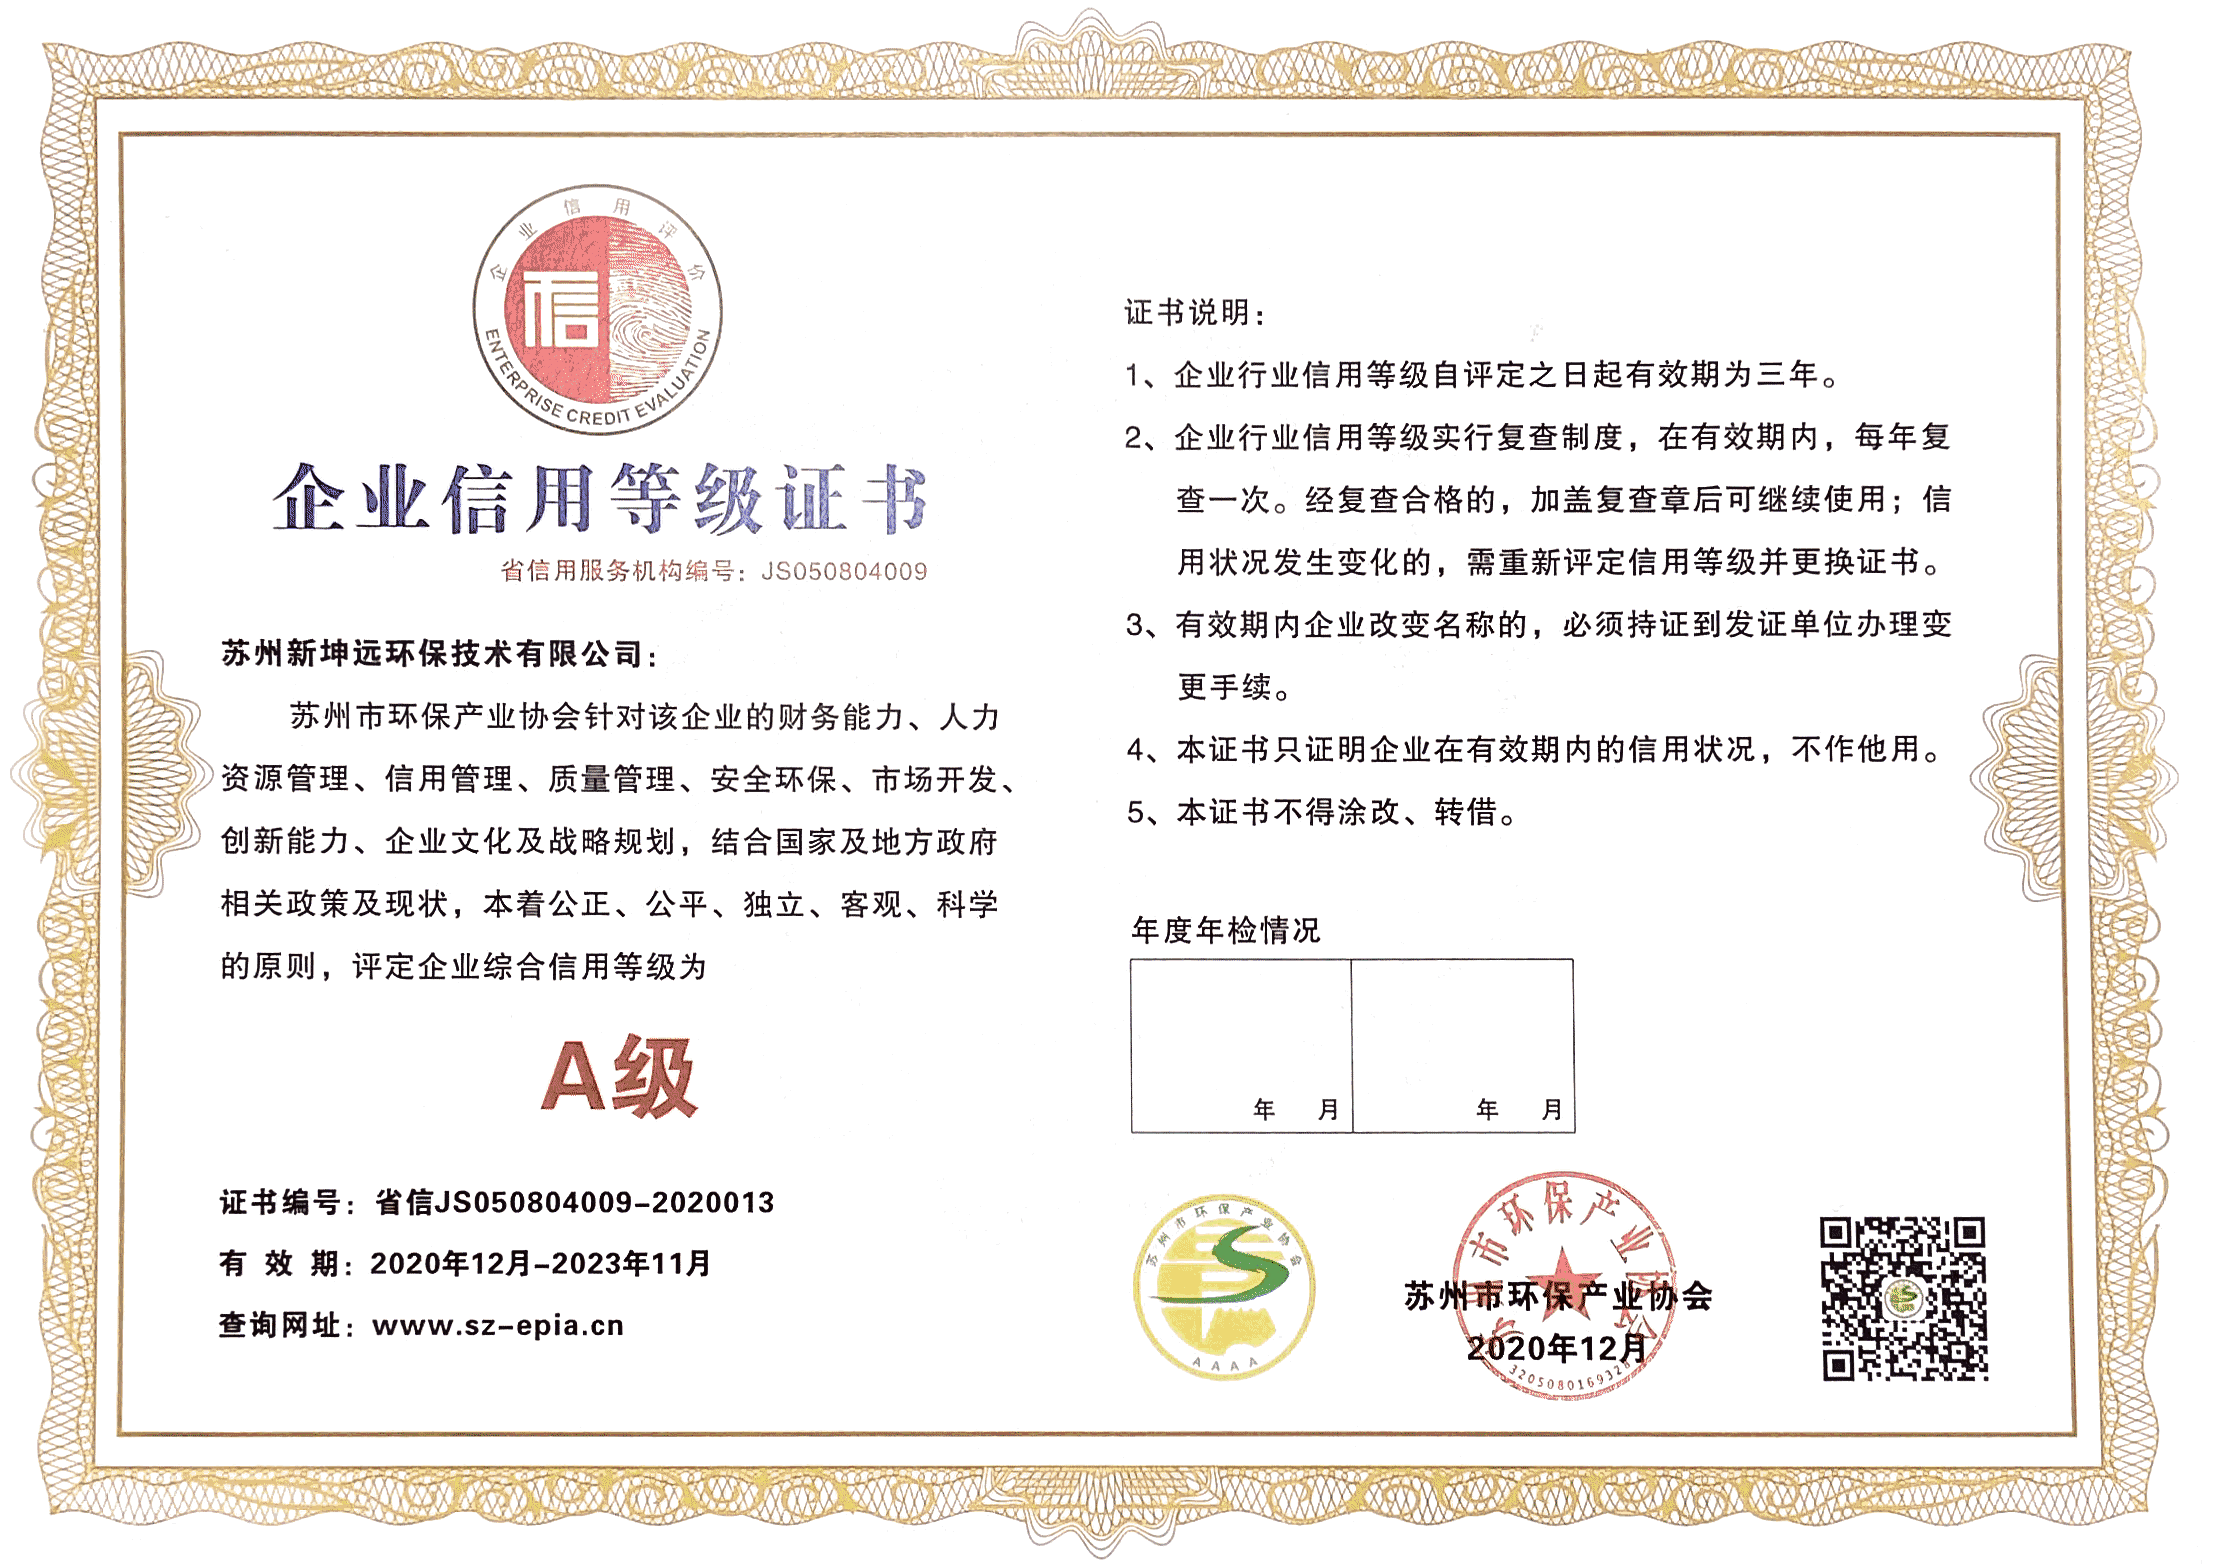 NGE-新坤远企业信用等级证书